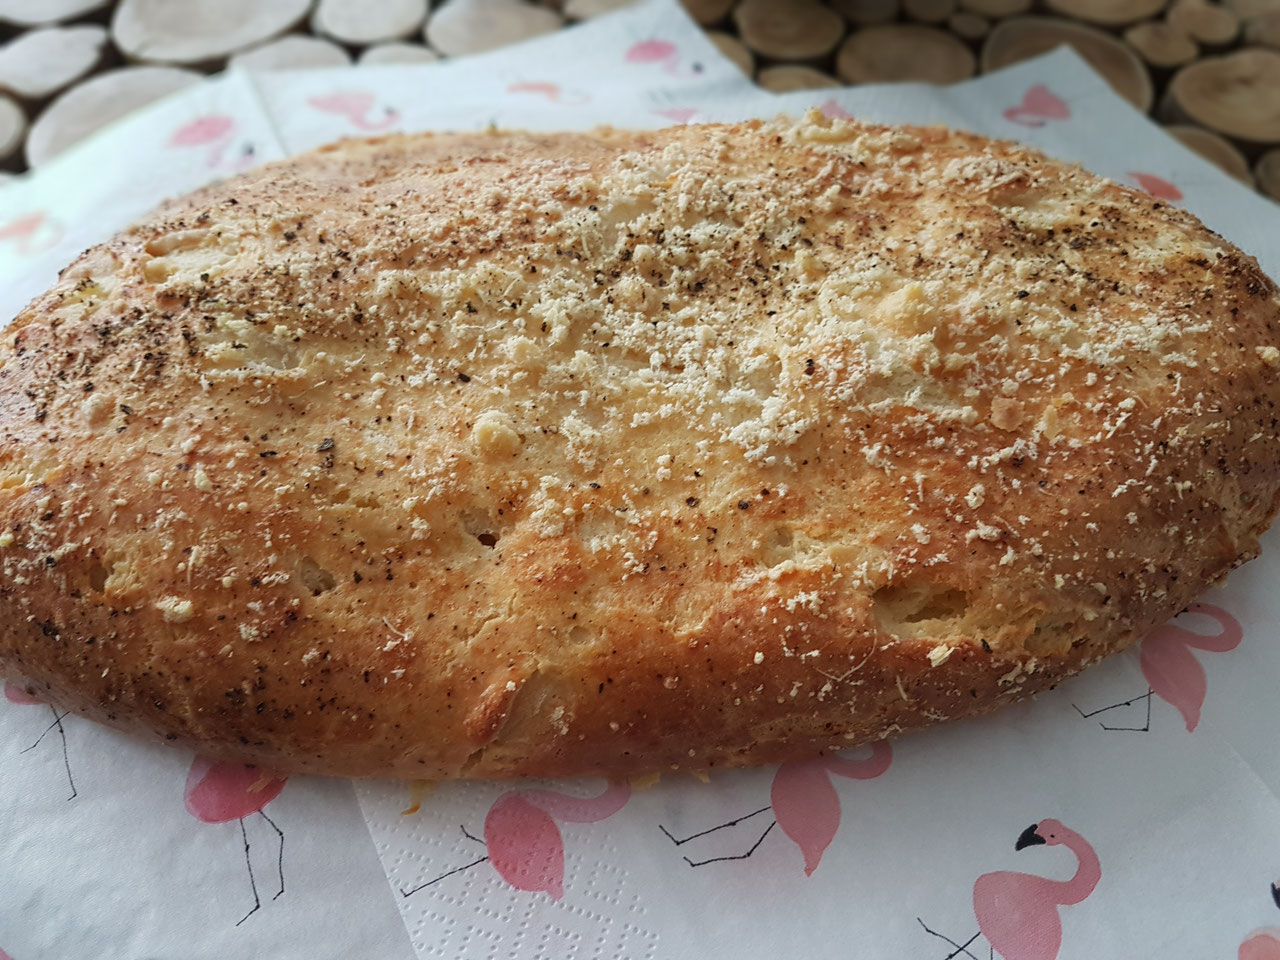 Parmesan-Pfeffer-Brot: Das perfekte Partybrot - Hyggelust - der Blog ...